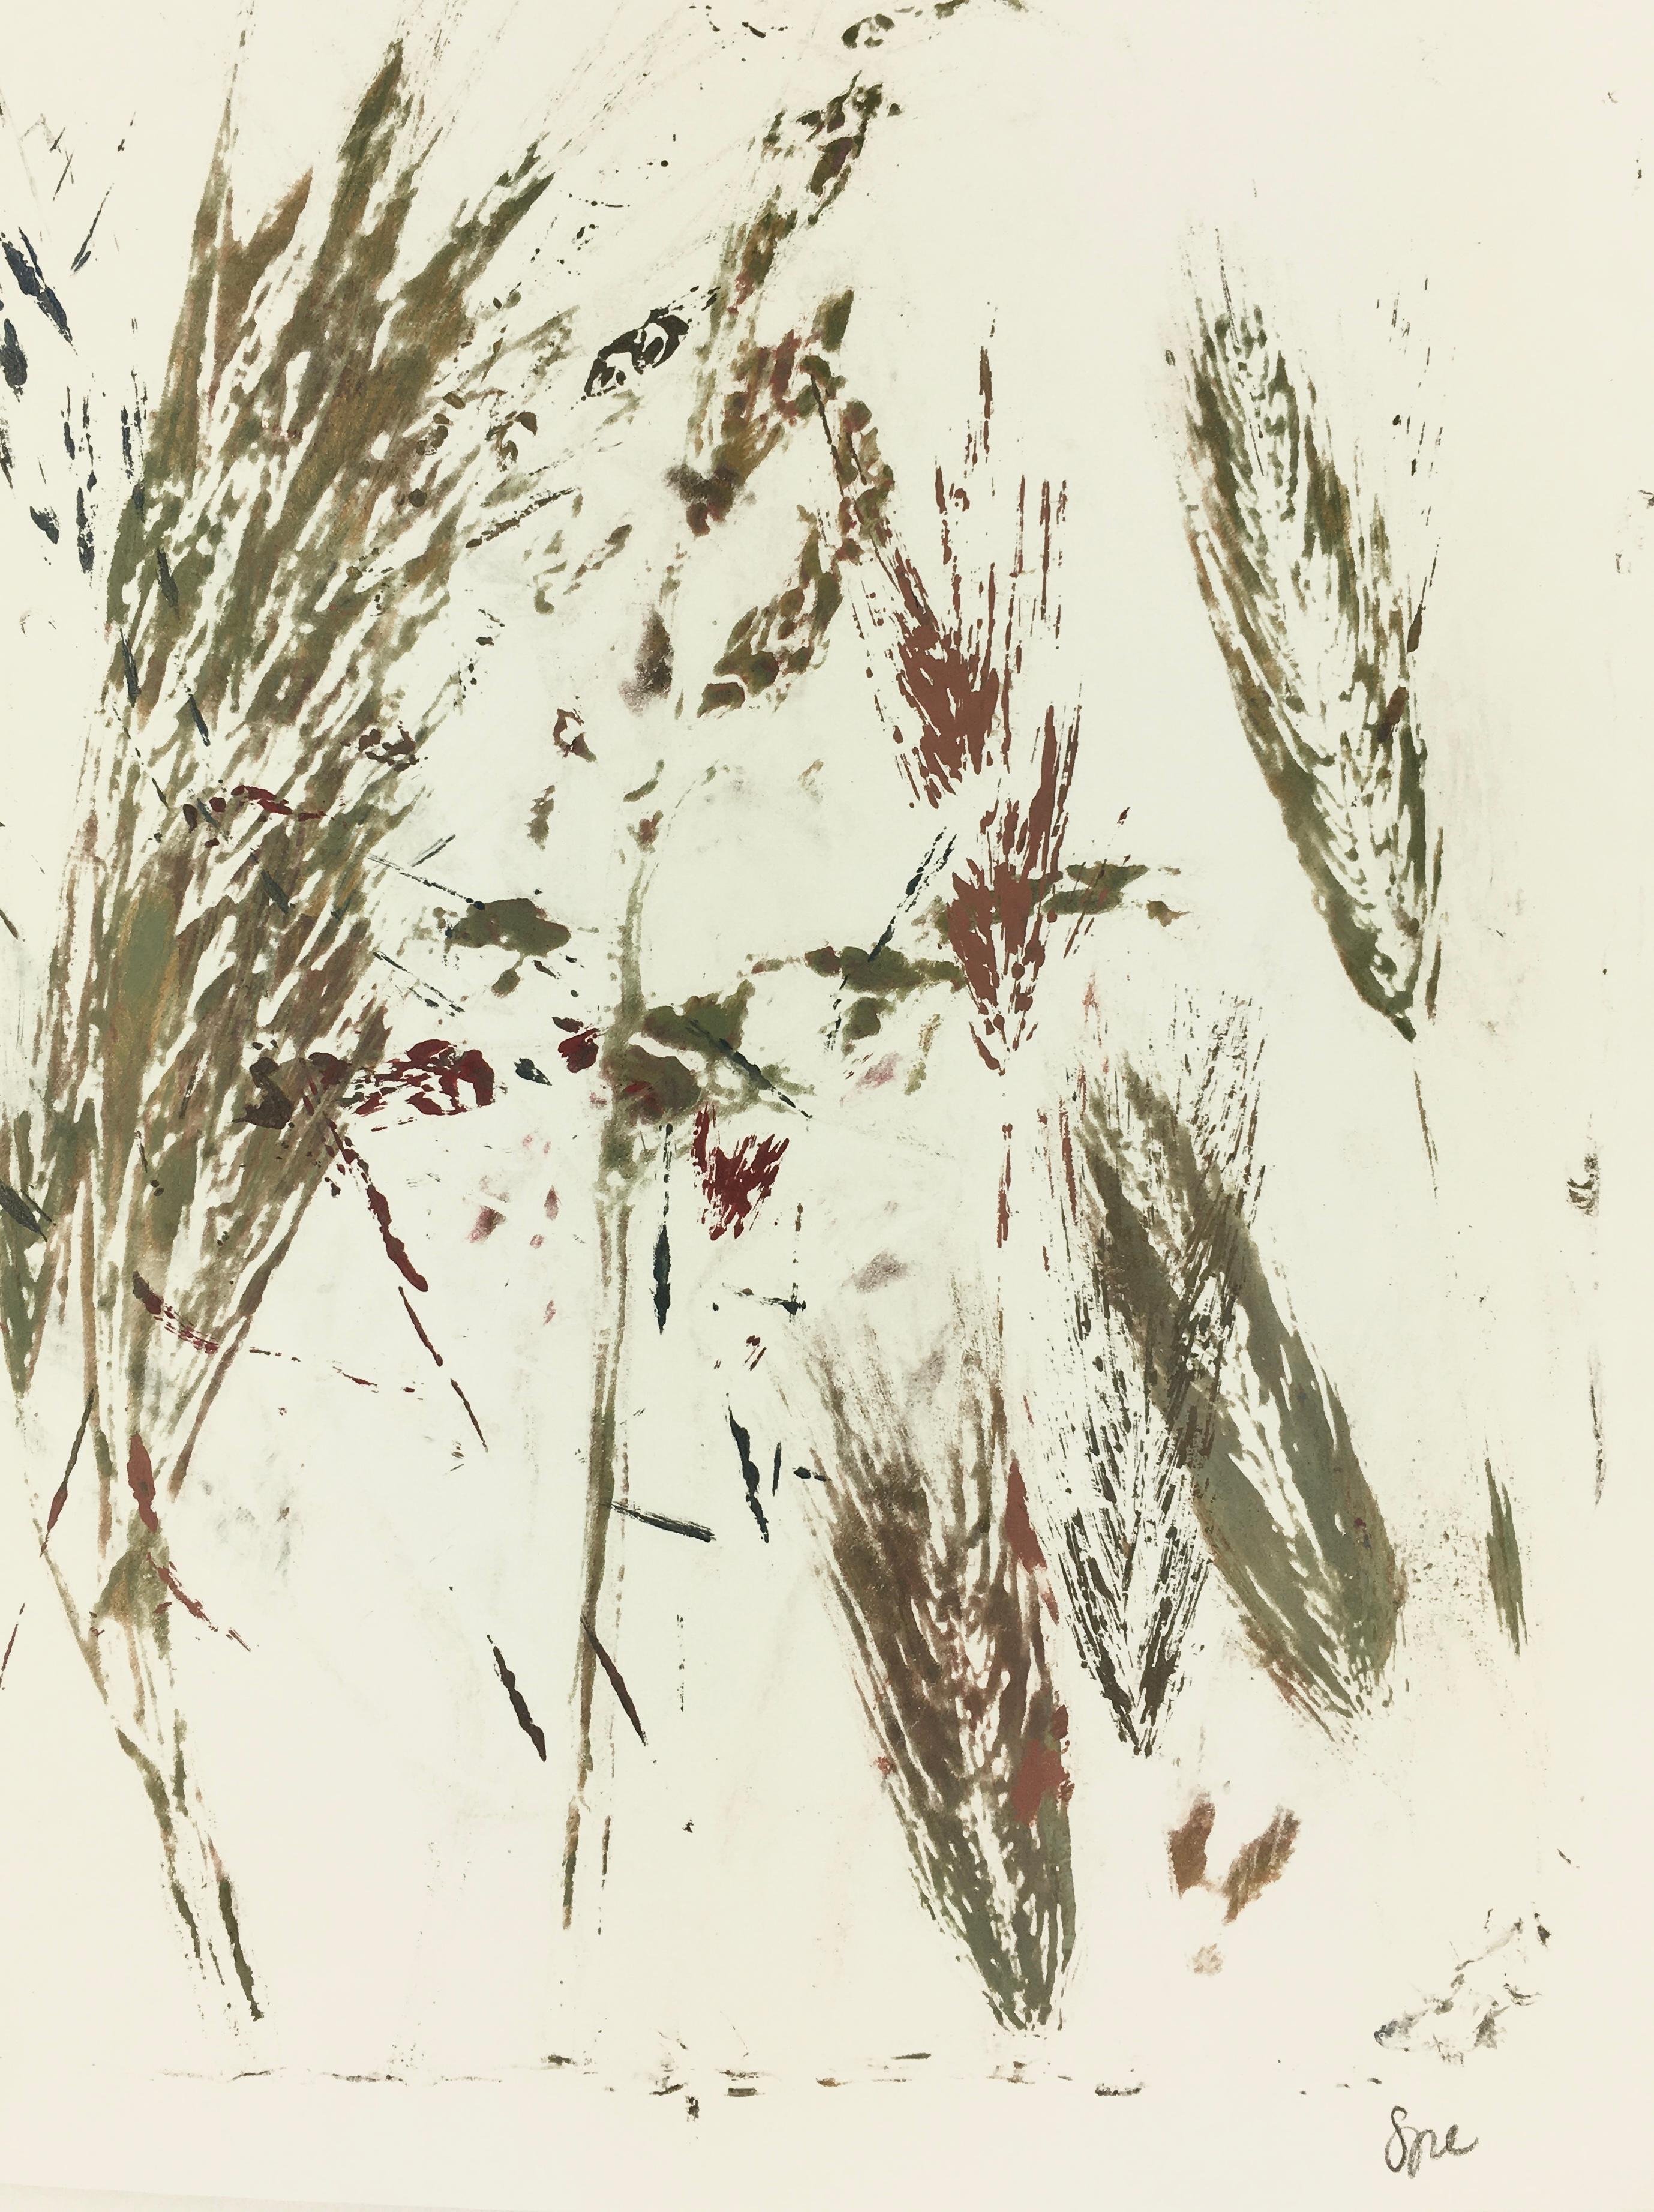 Peinture abstraite anglaise - Grass moderne - Painting de Spe 